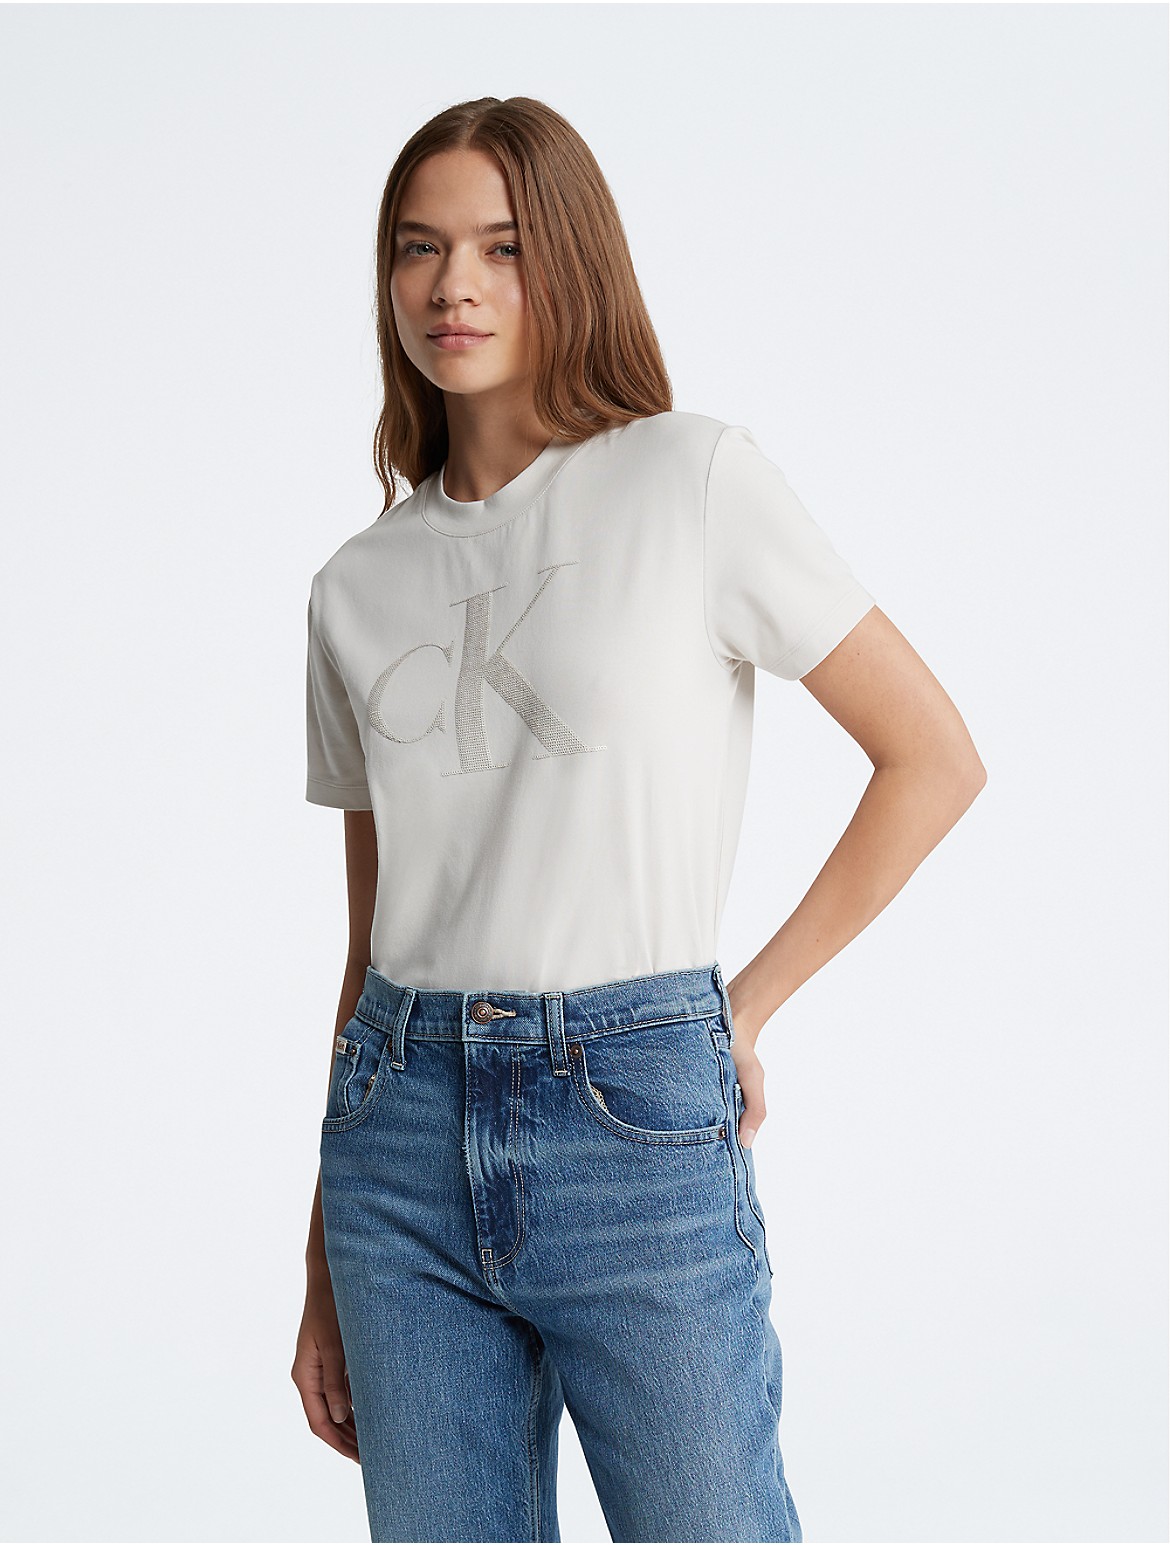 Calvin Klein Women's Sequin Monogram Logo Crewneck T-Shirt - White - L